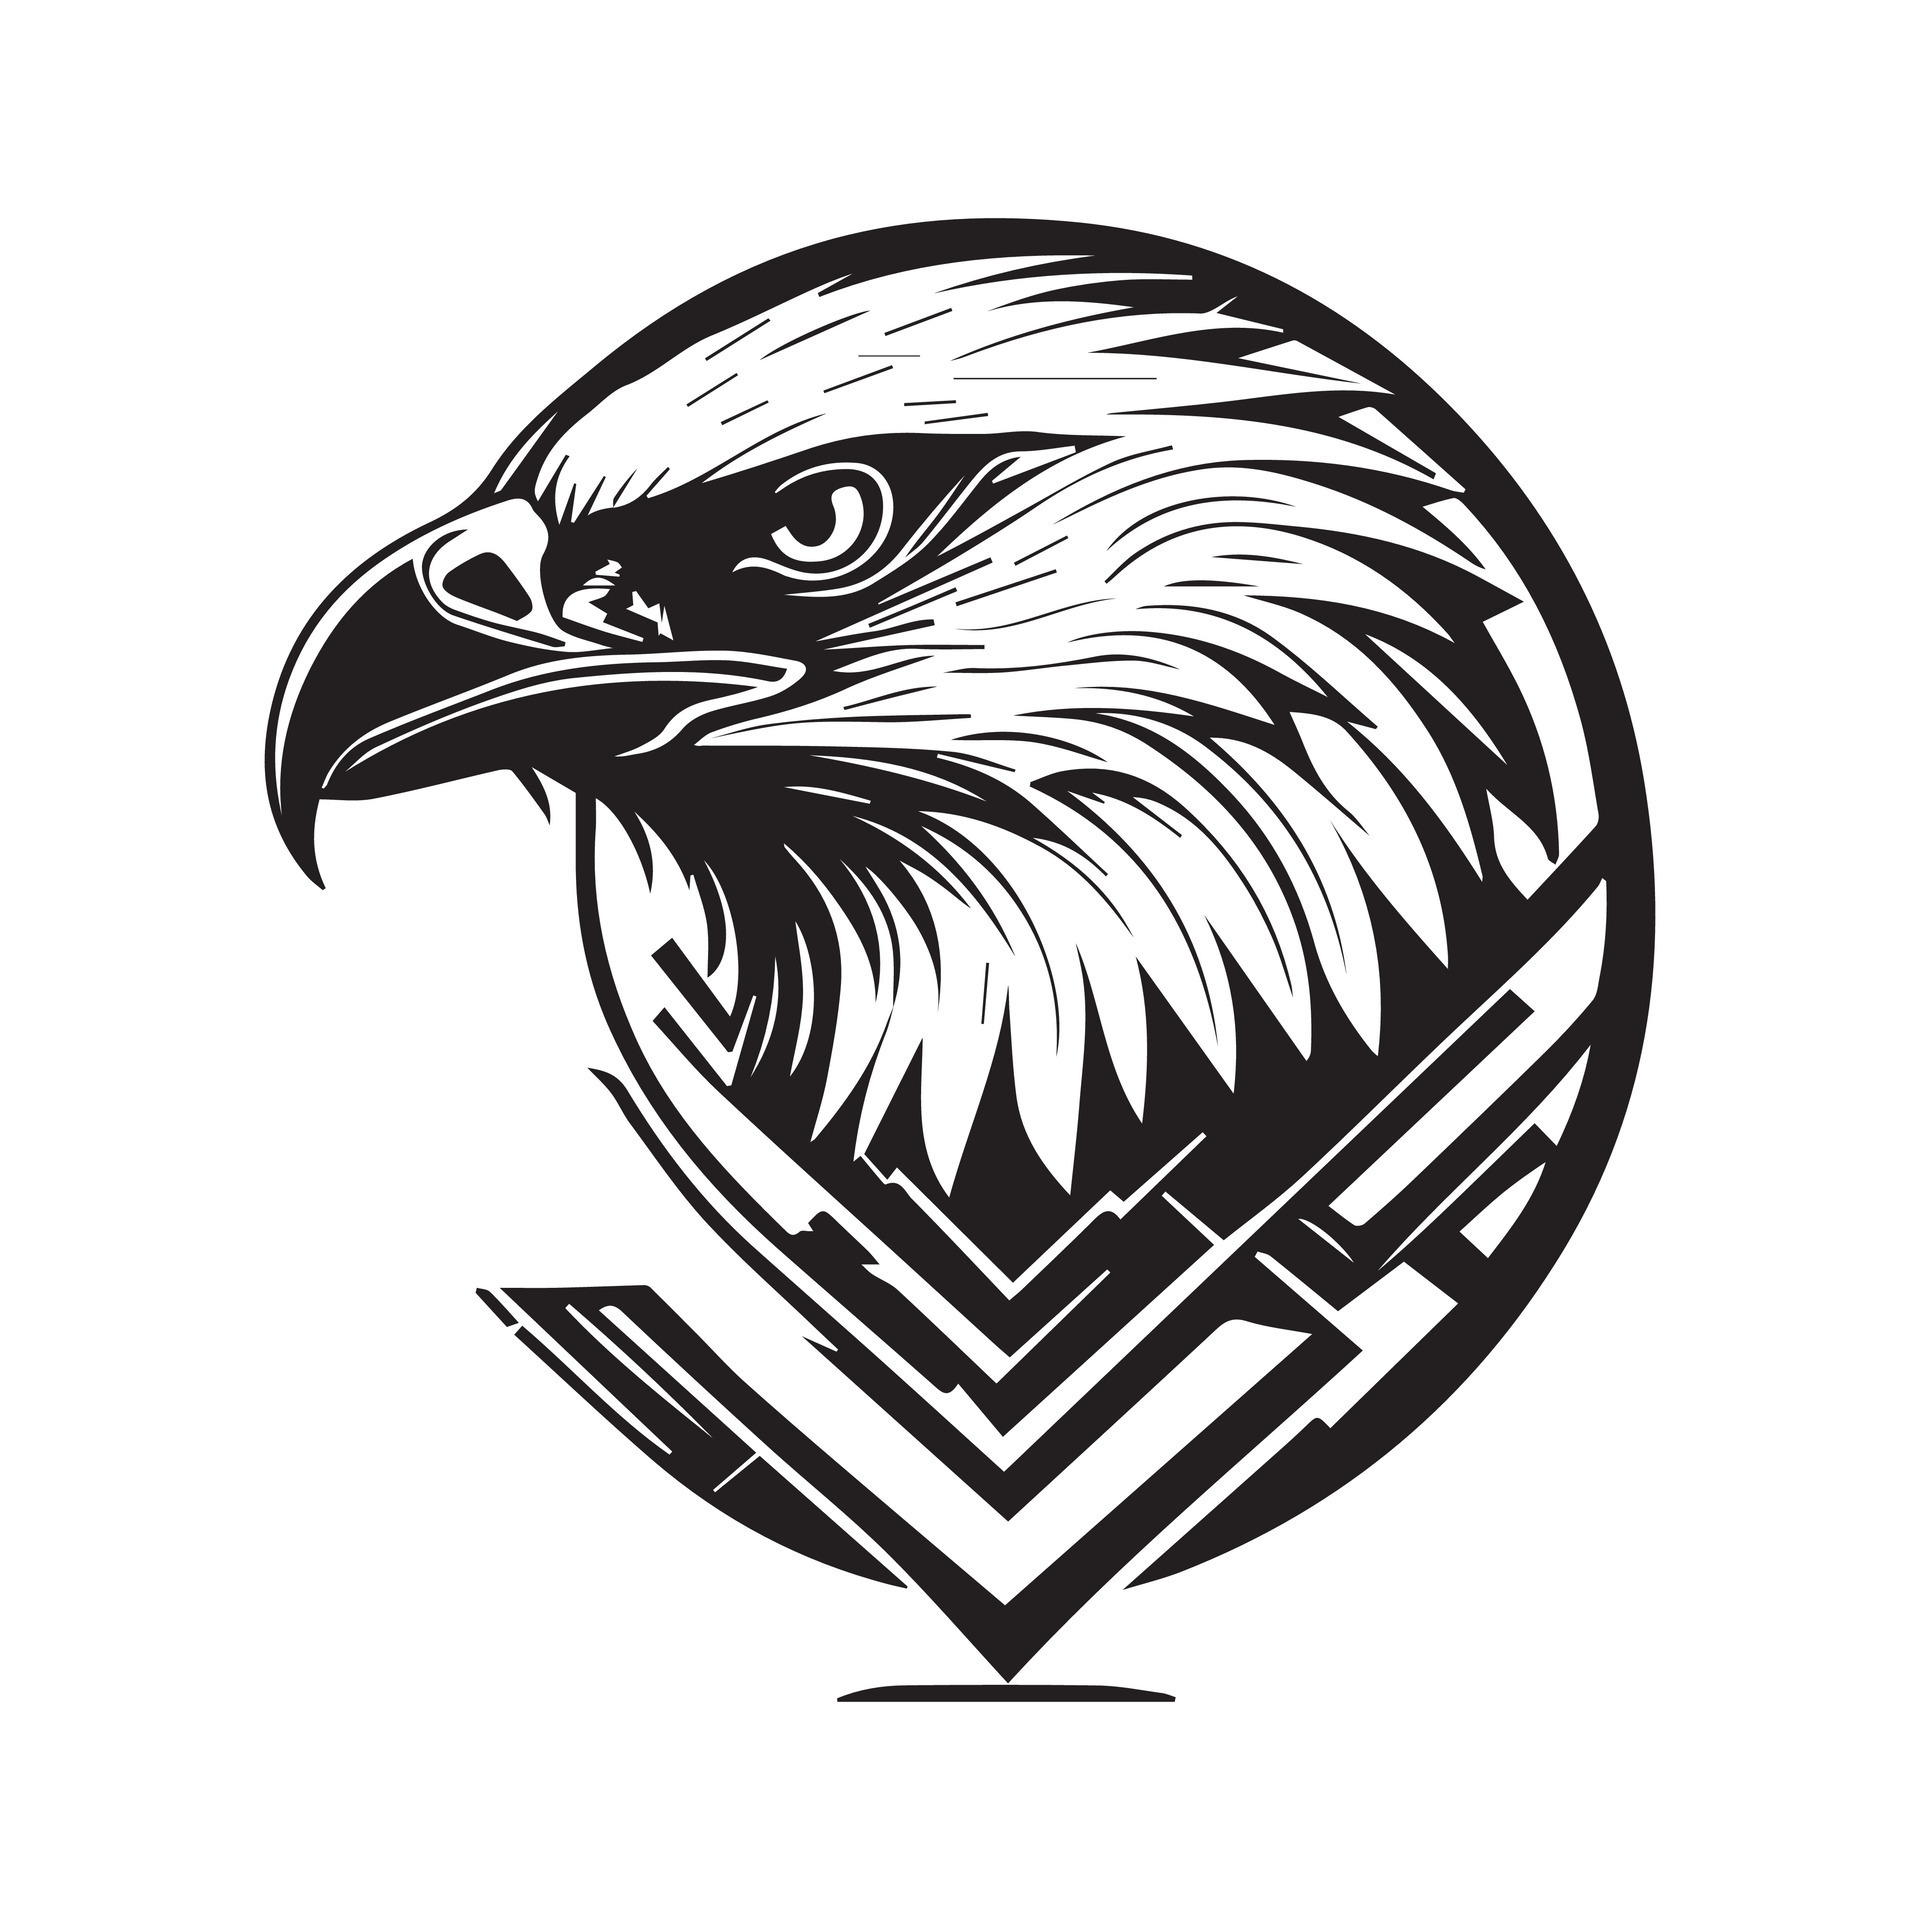 Eagle tattoo design Royalty Free Vector Image - VectorStock